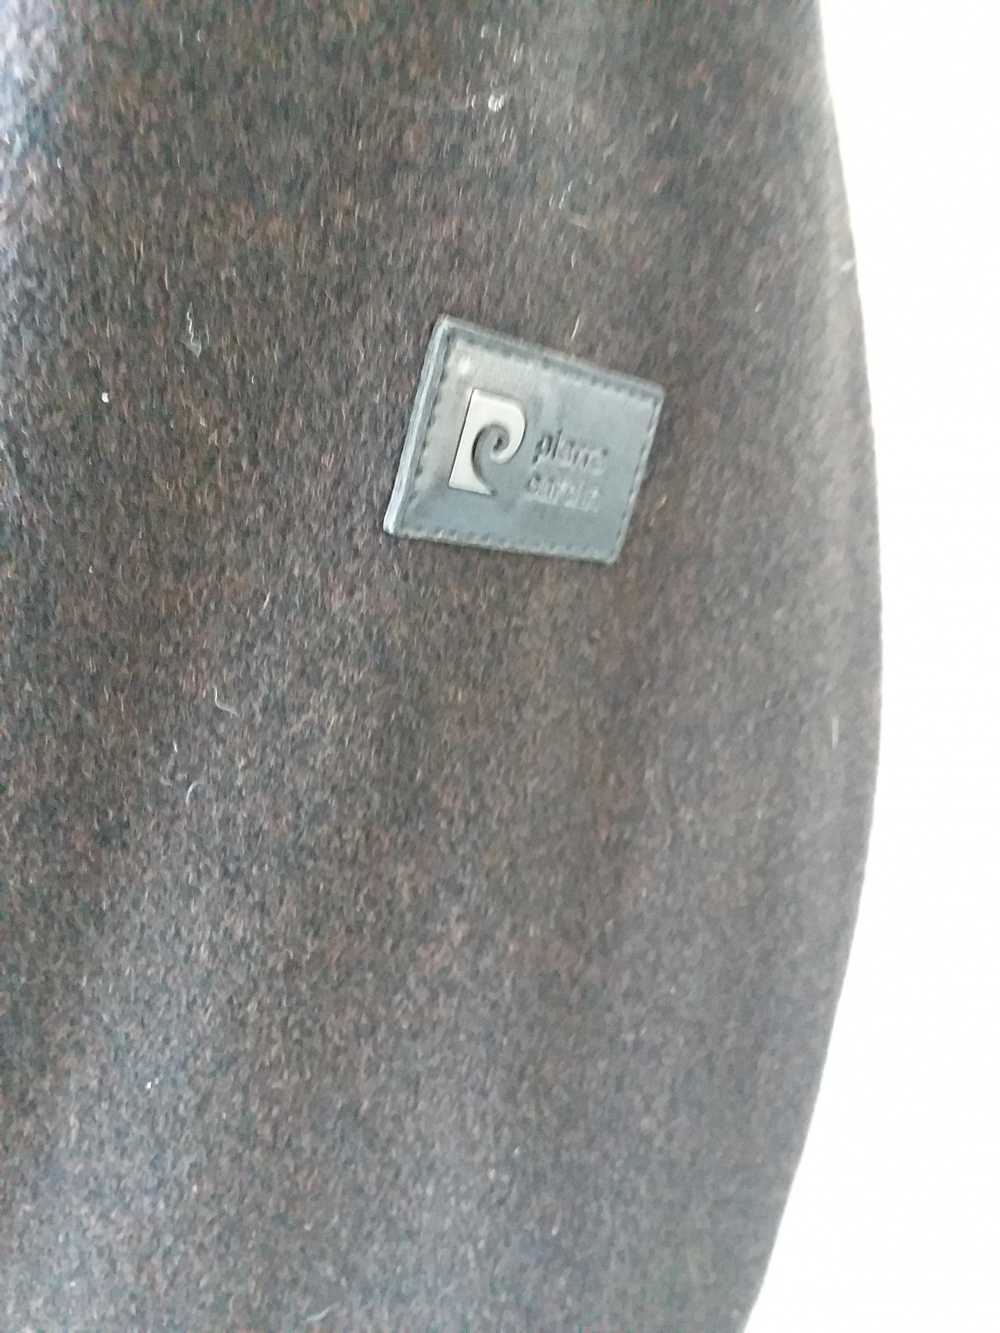 Мужское пальто PIERRE CARDIN на 50-52 размер